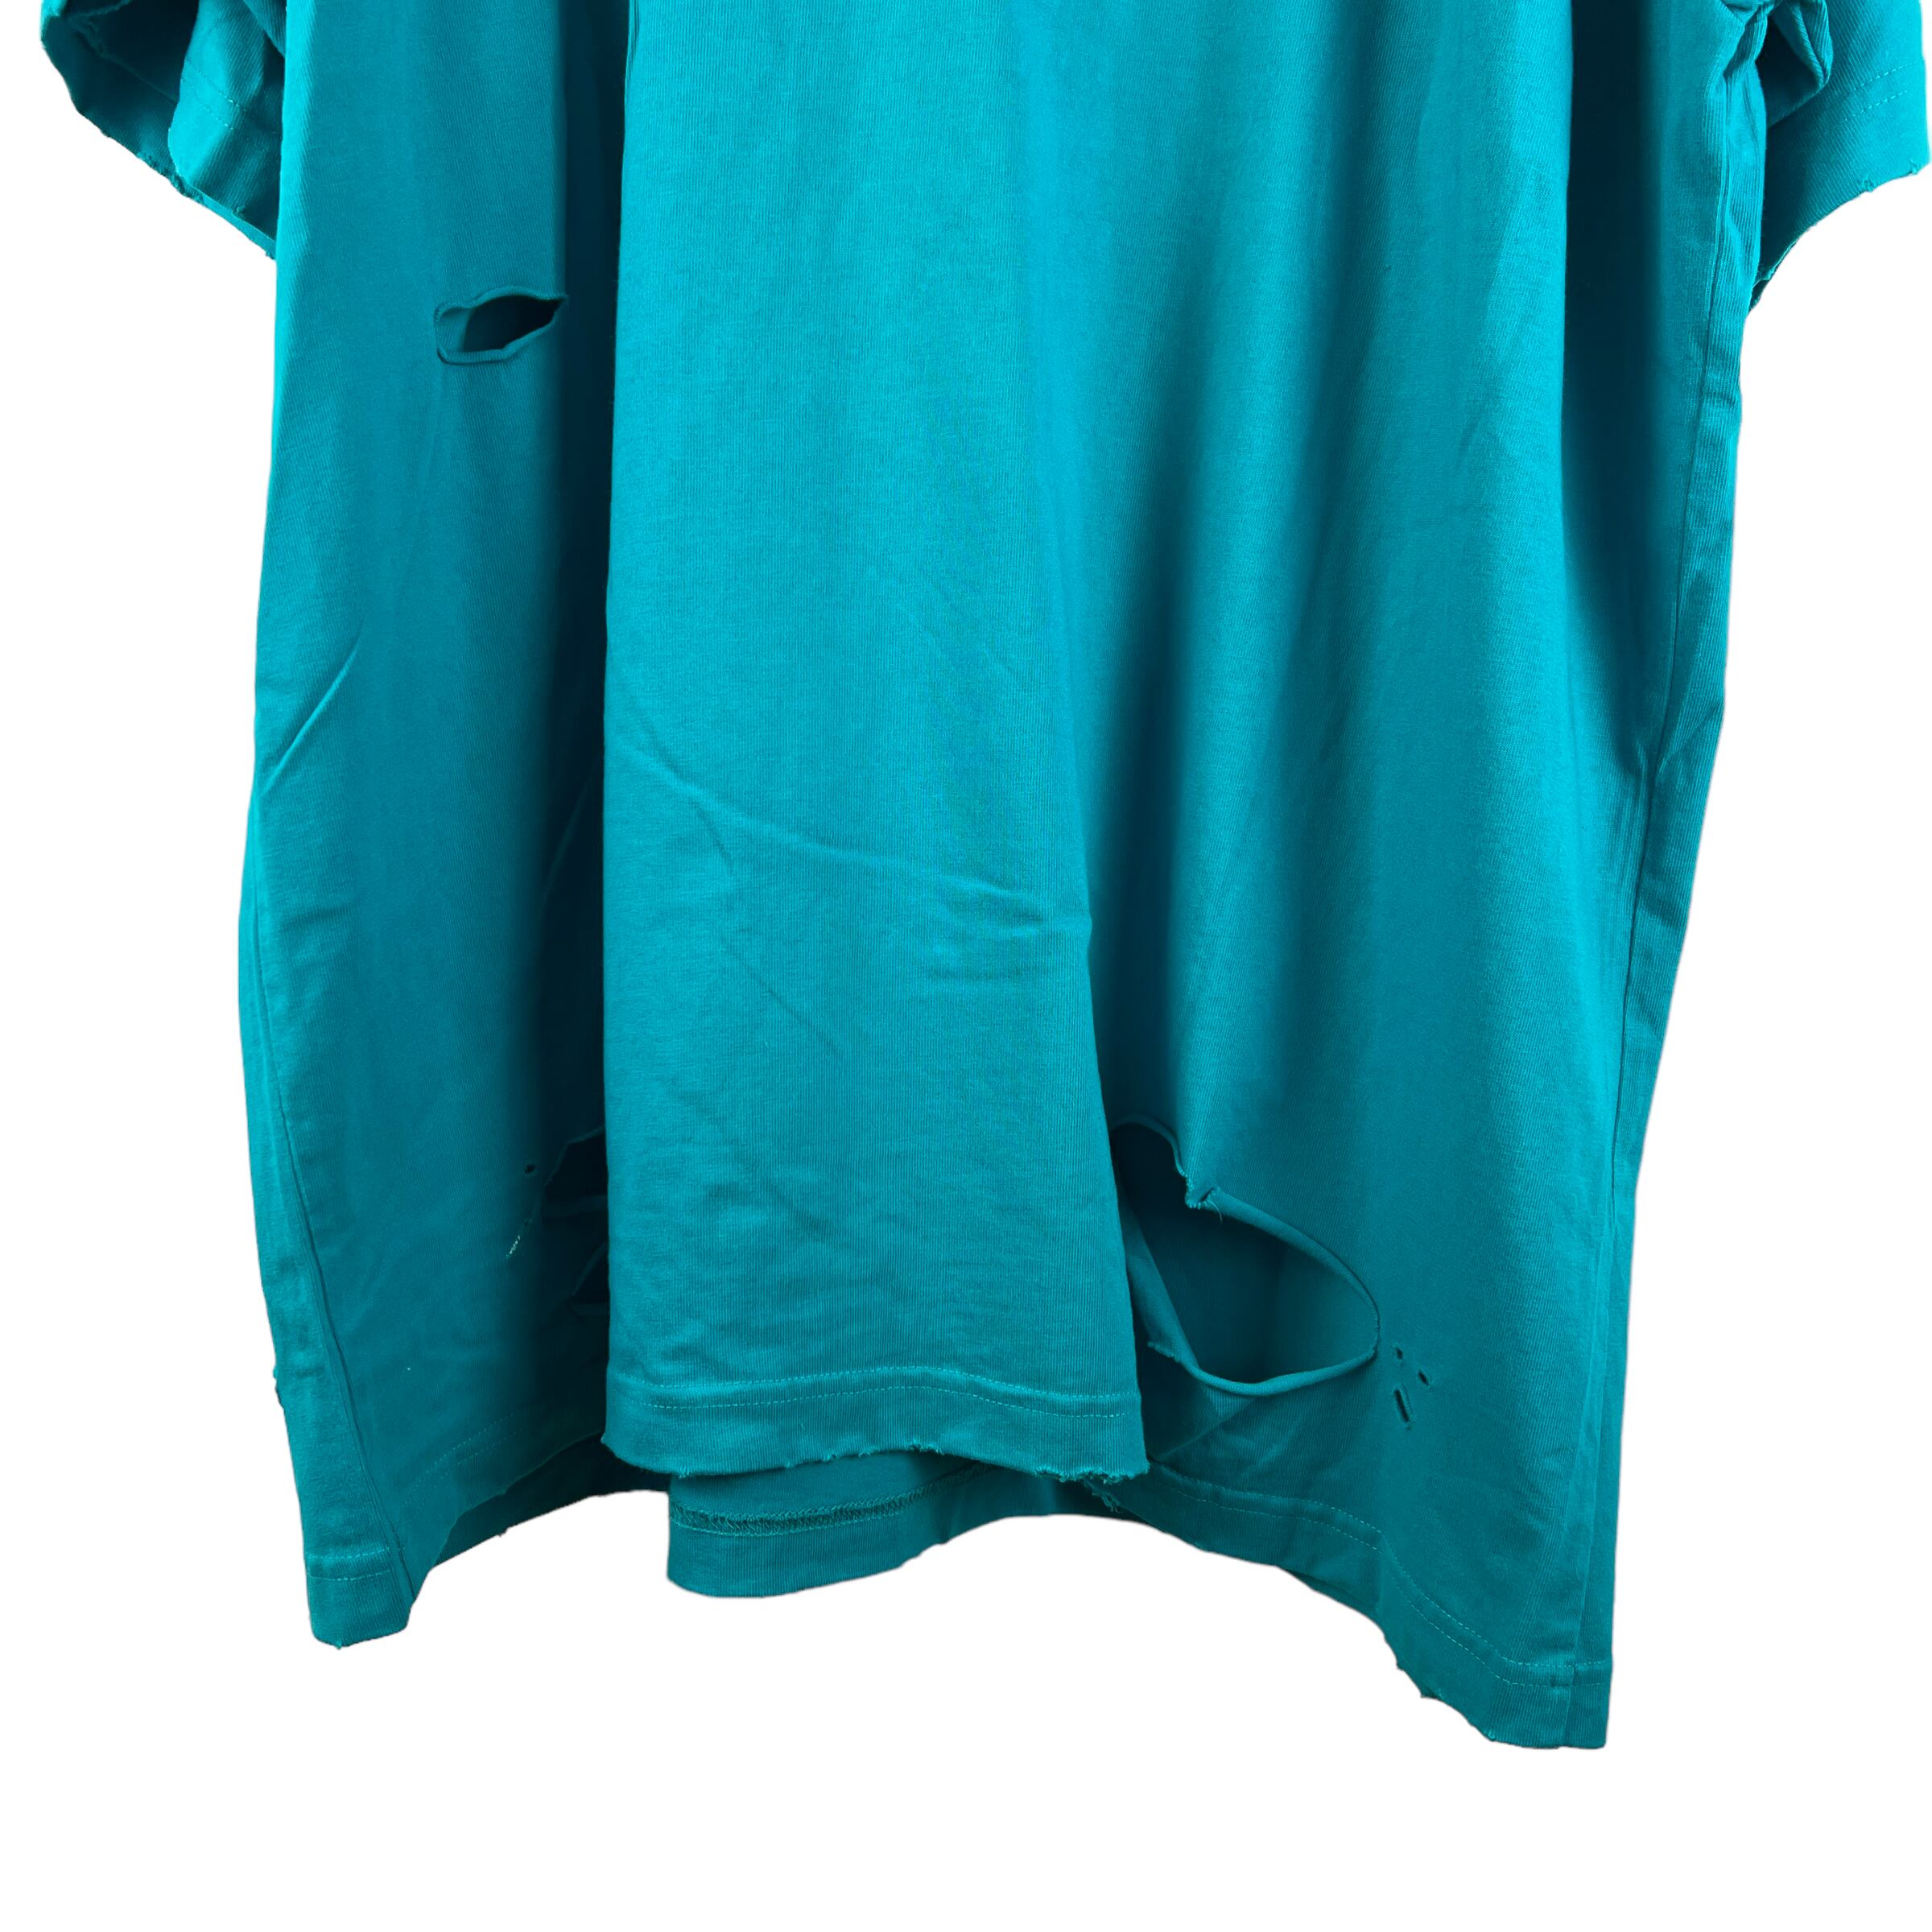 Balenciaga(バレンシアガ) Damage Design Shortsleeve T Shirt (blue 